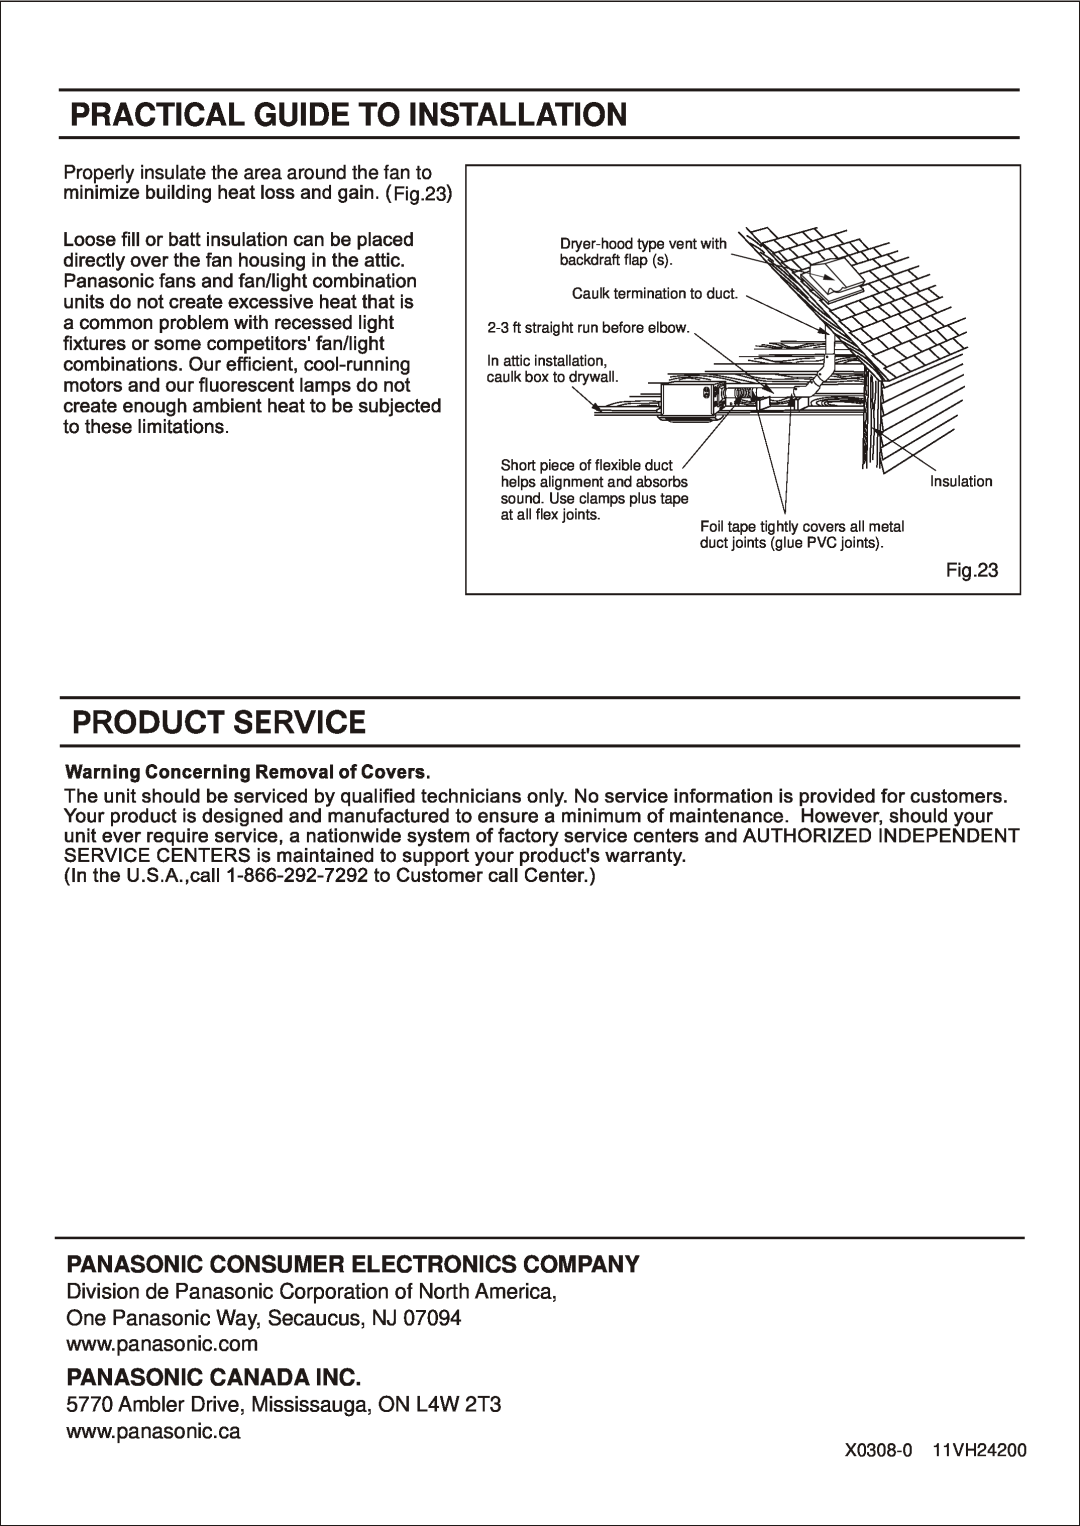 Panasonic FV-11VH2 manual Practical Guide To Installation, Division de Panasonic Corporation of North America 